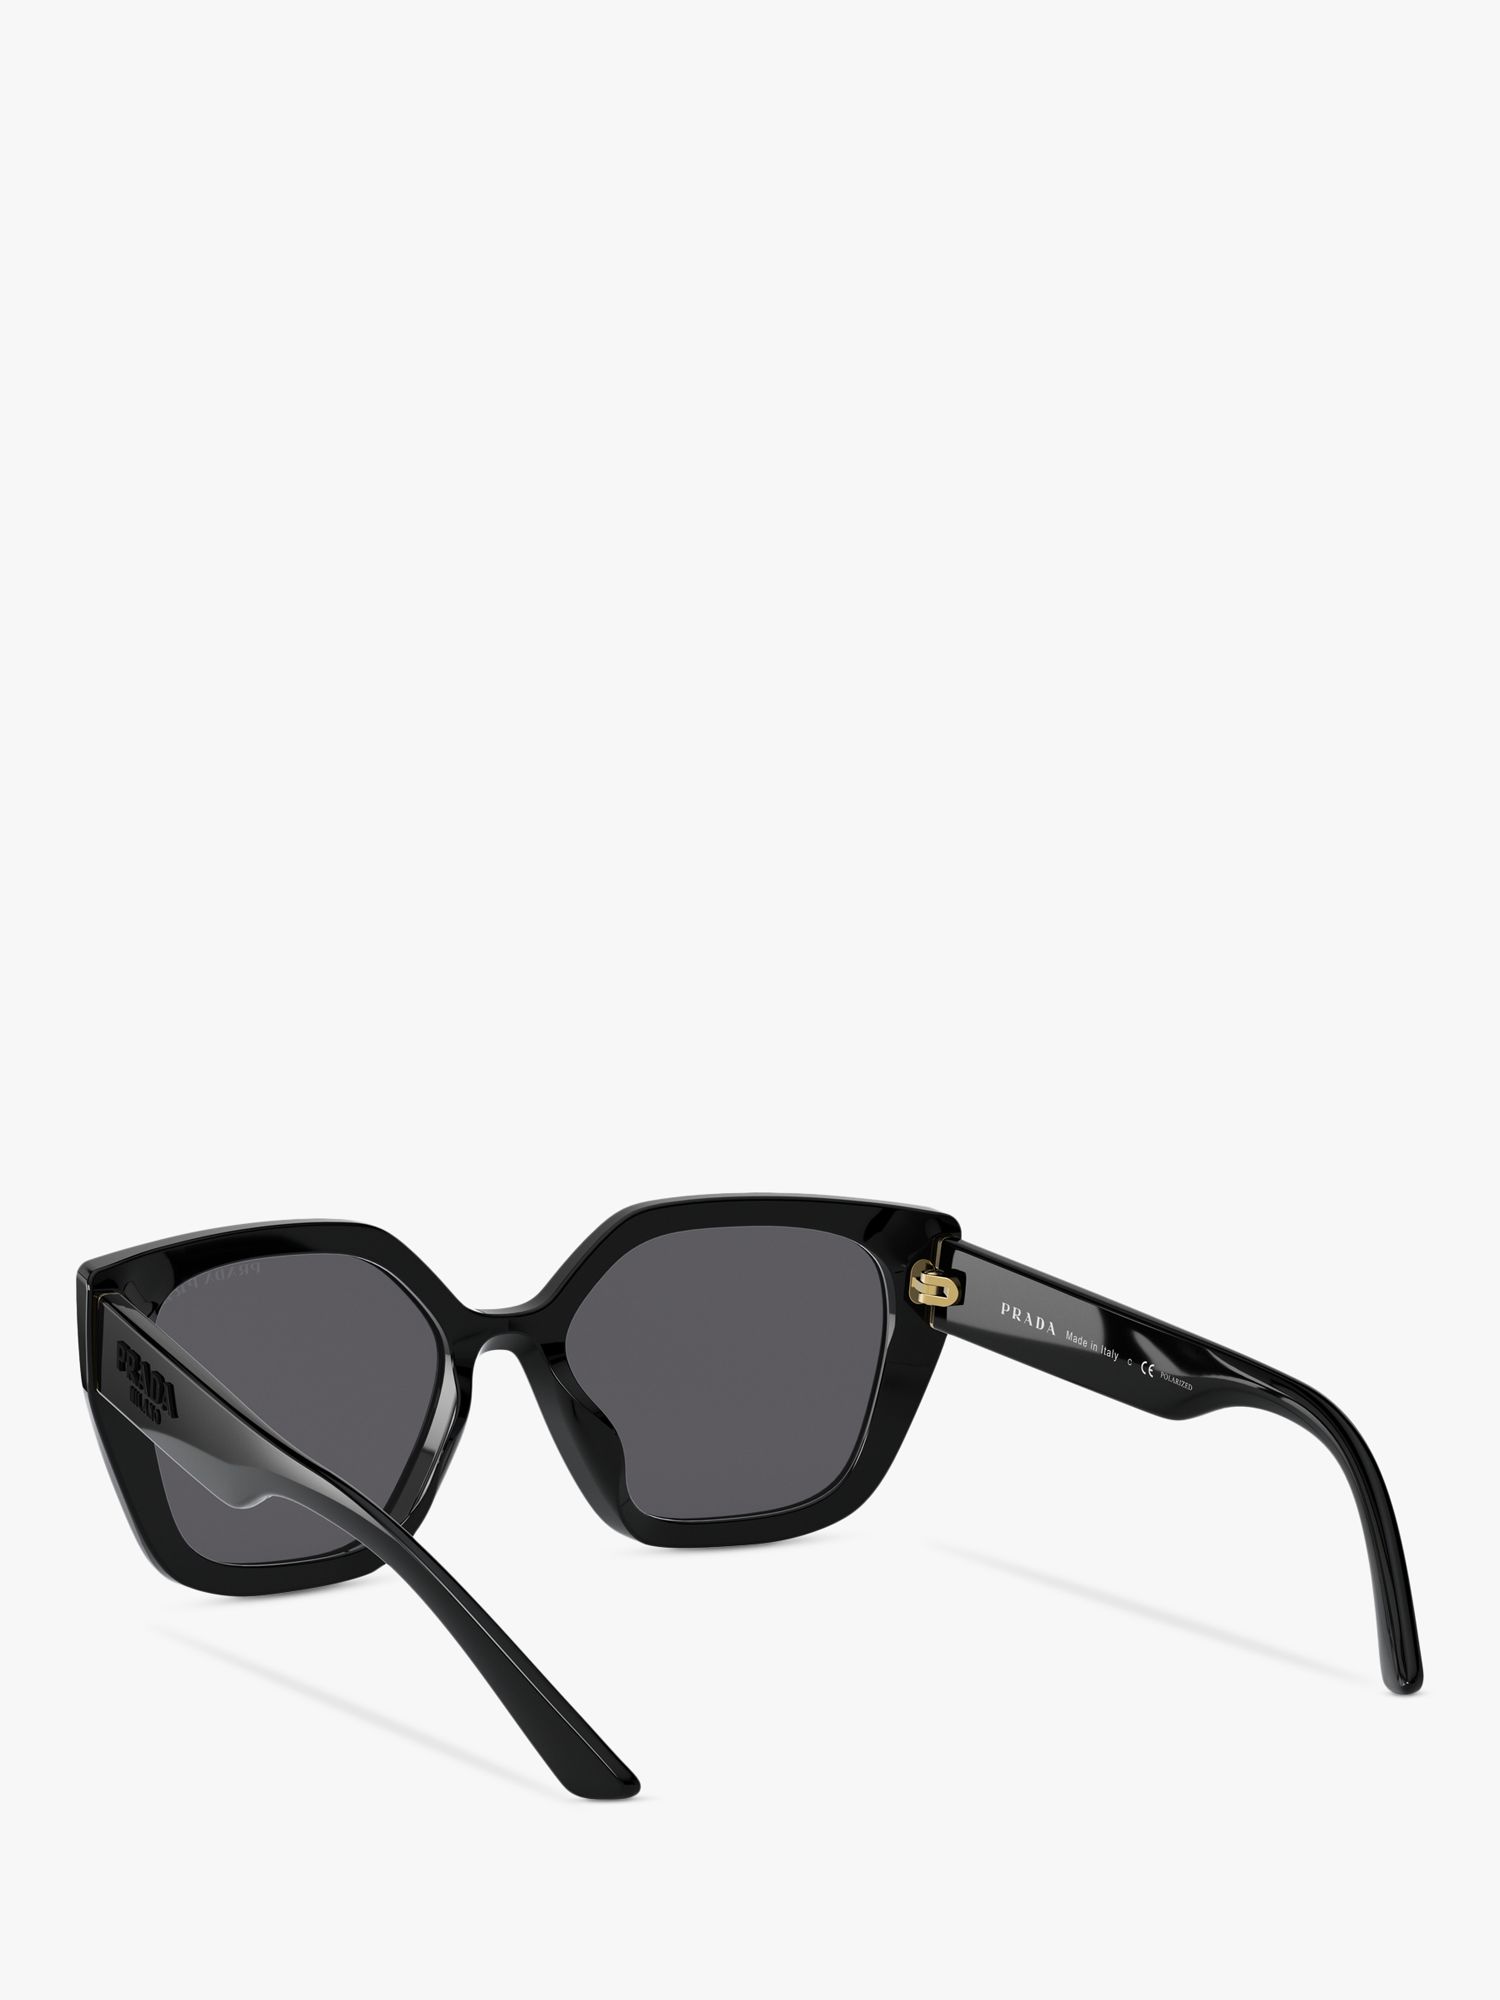 Prada PR 24XS Women's Polarised Square Sunglasses, Black/Grey at John Lewis & Partners